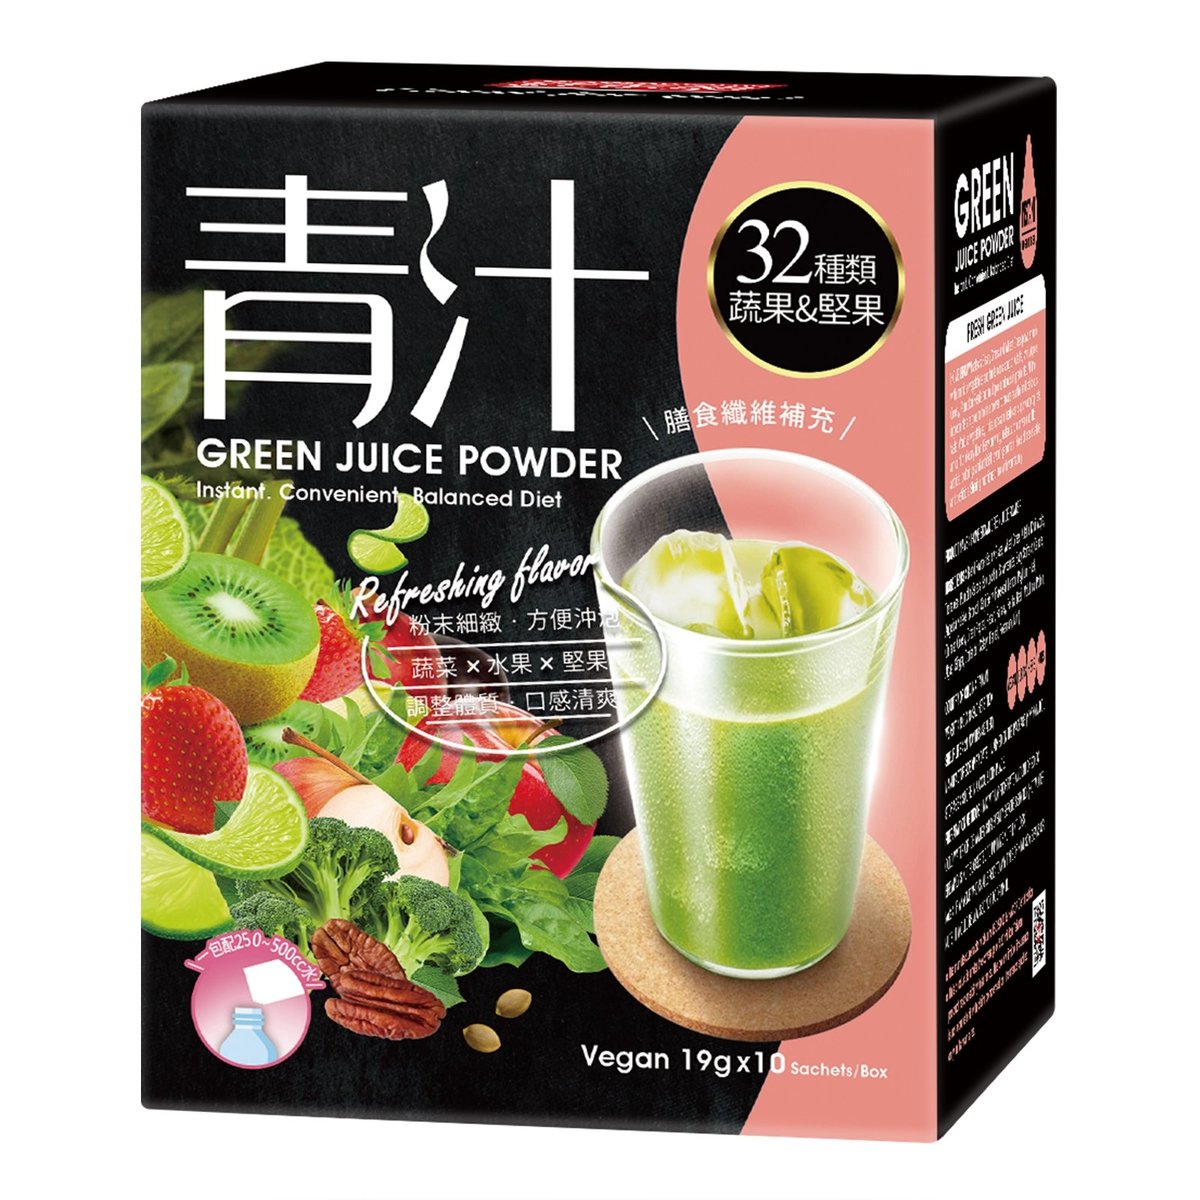 Green Juice Powder